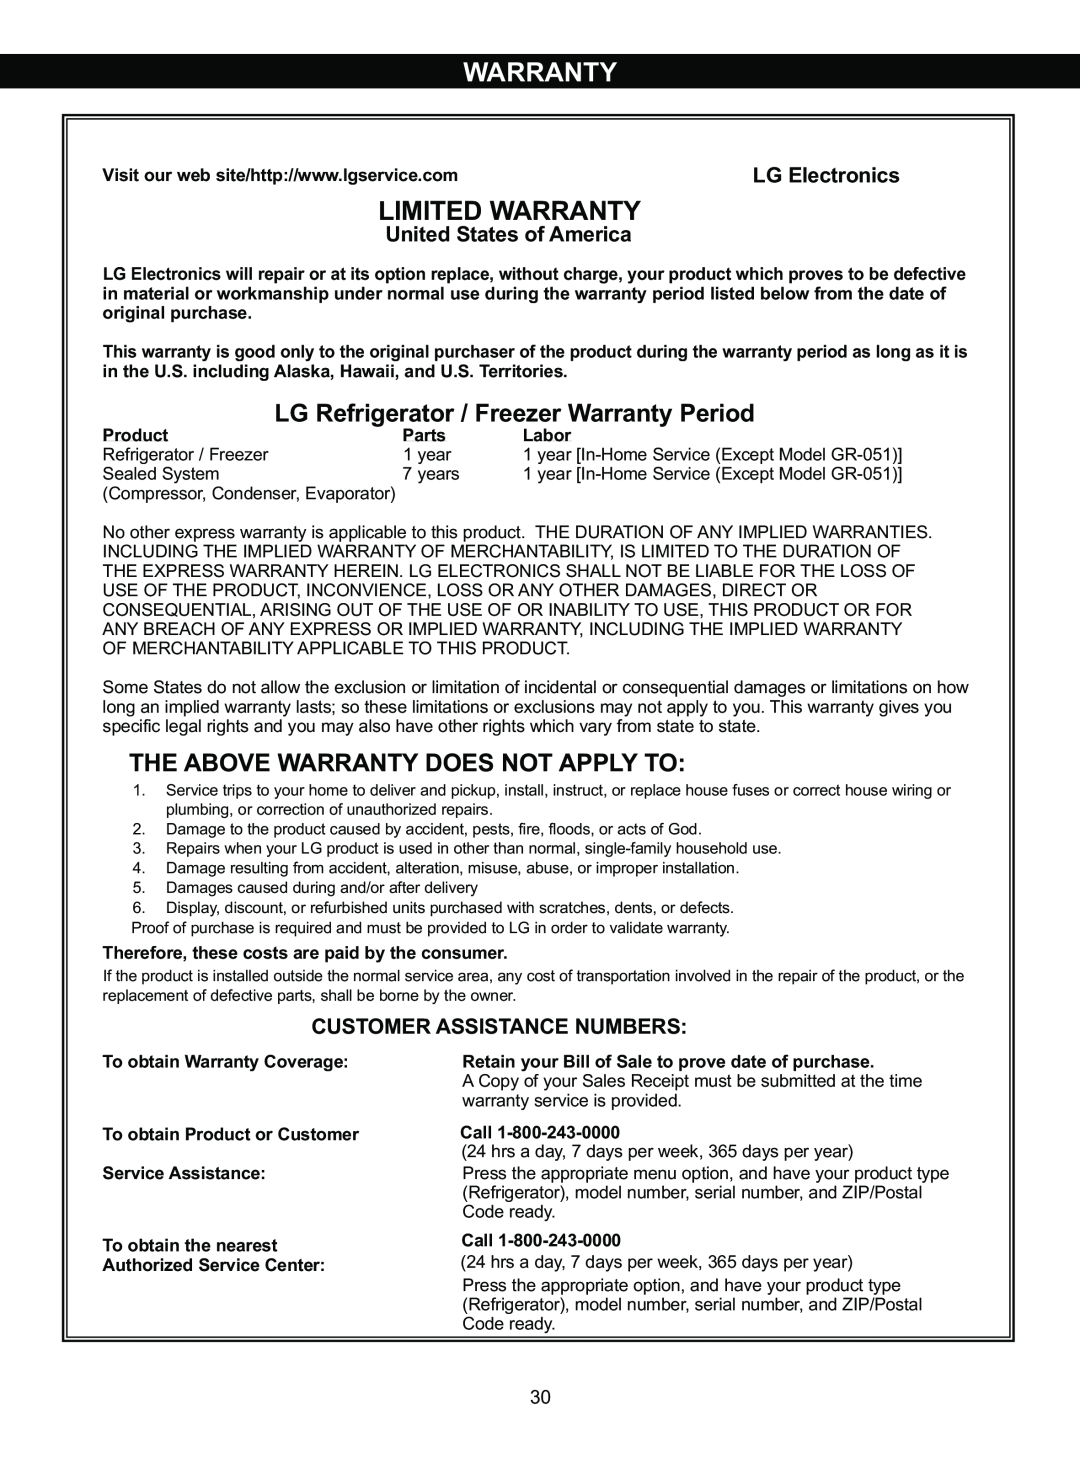 LG Electronics LSC23924ST Limited Warranty, LG Refrigerator / Freezer Warranty Period, United States of America 